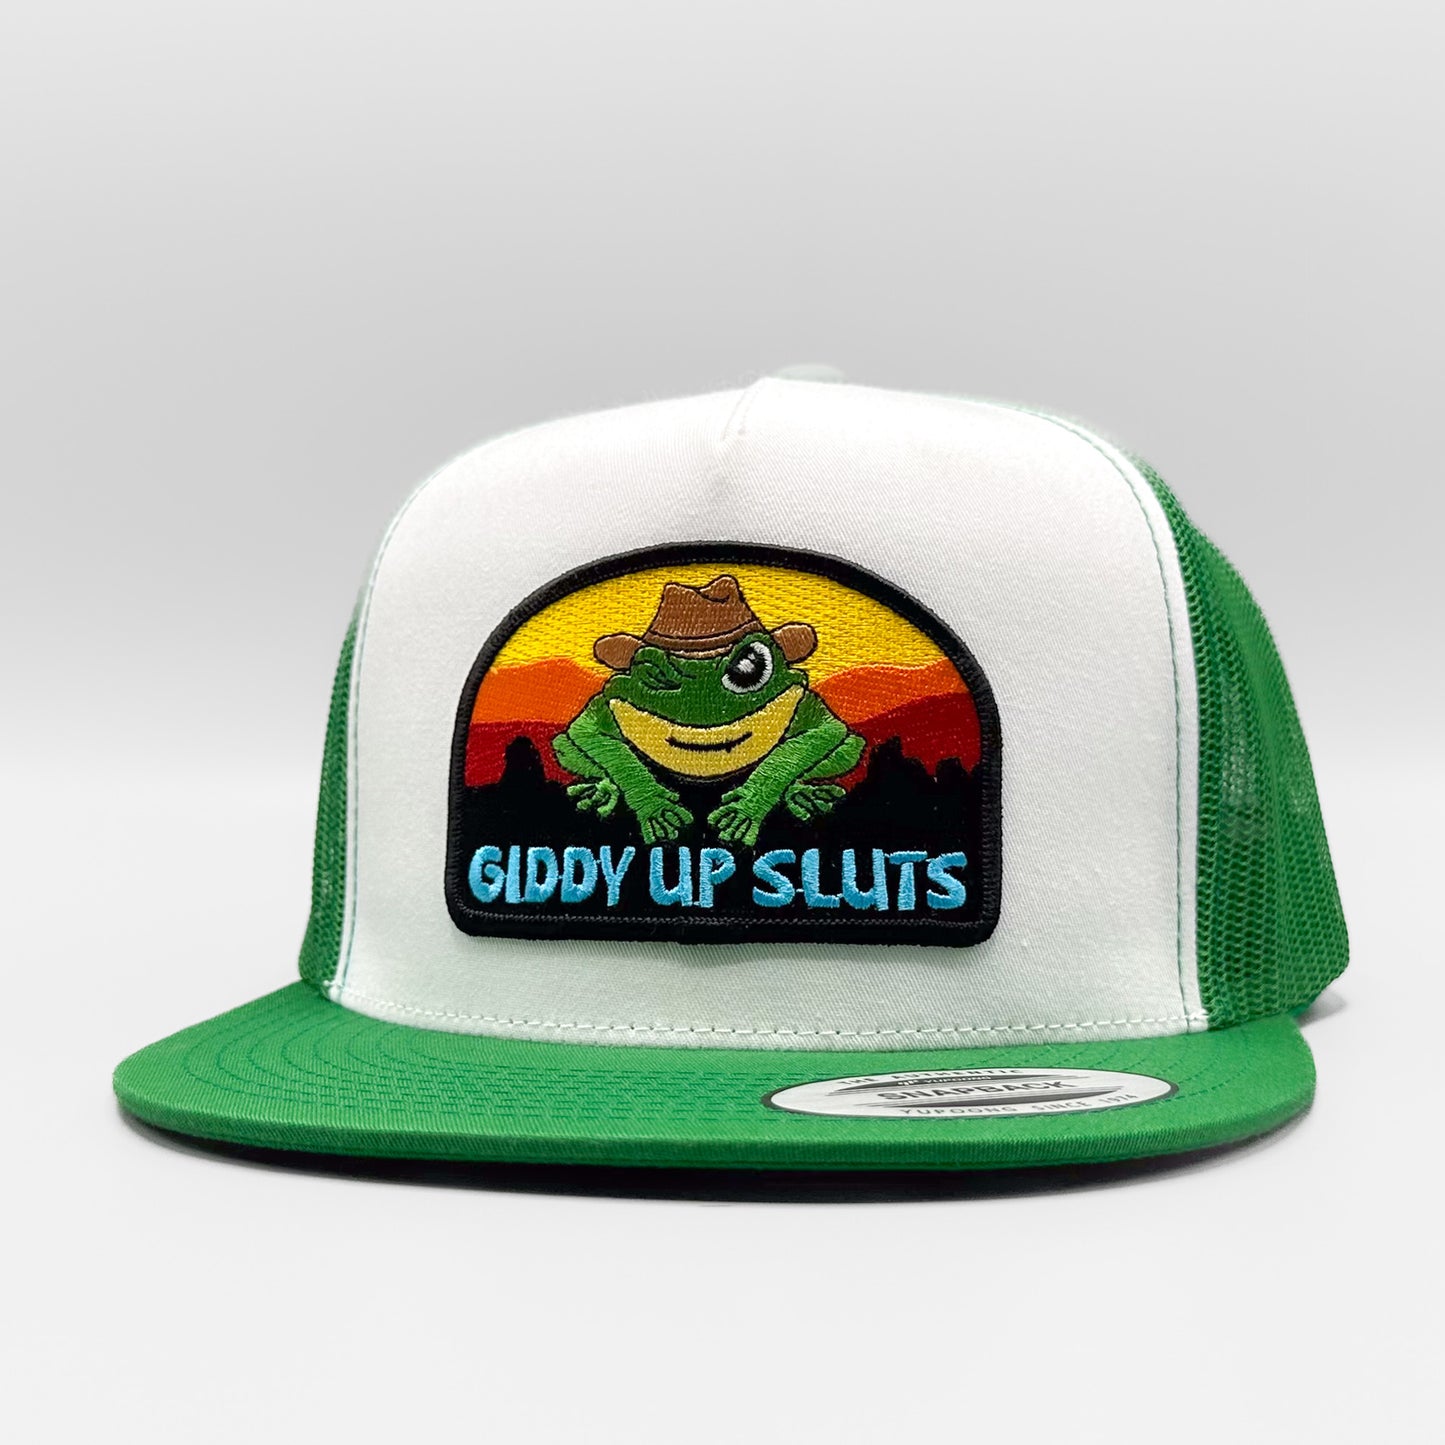 Giddy Up Sluts "Vintage Truckers Original" Trucker Hat